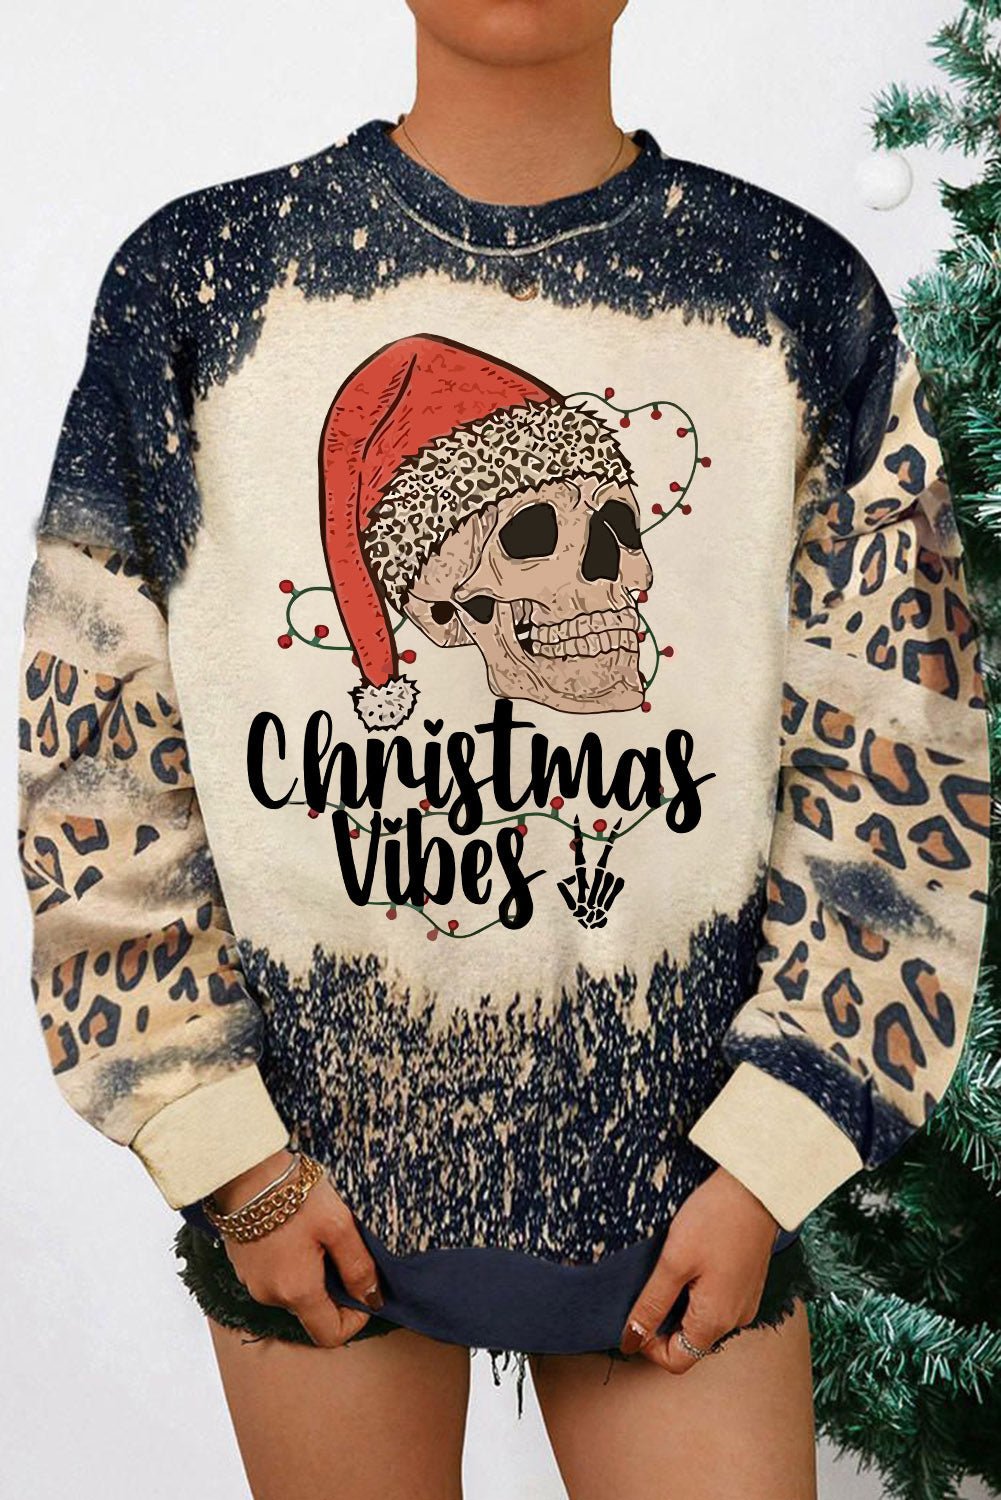 Round Neck Long Sleeve CHRISMAS VIBES Graphic Sweatshirt - Guy Christopher